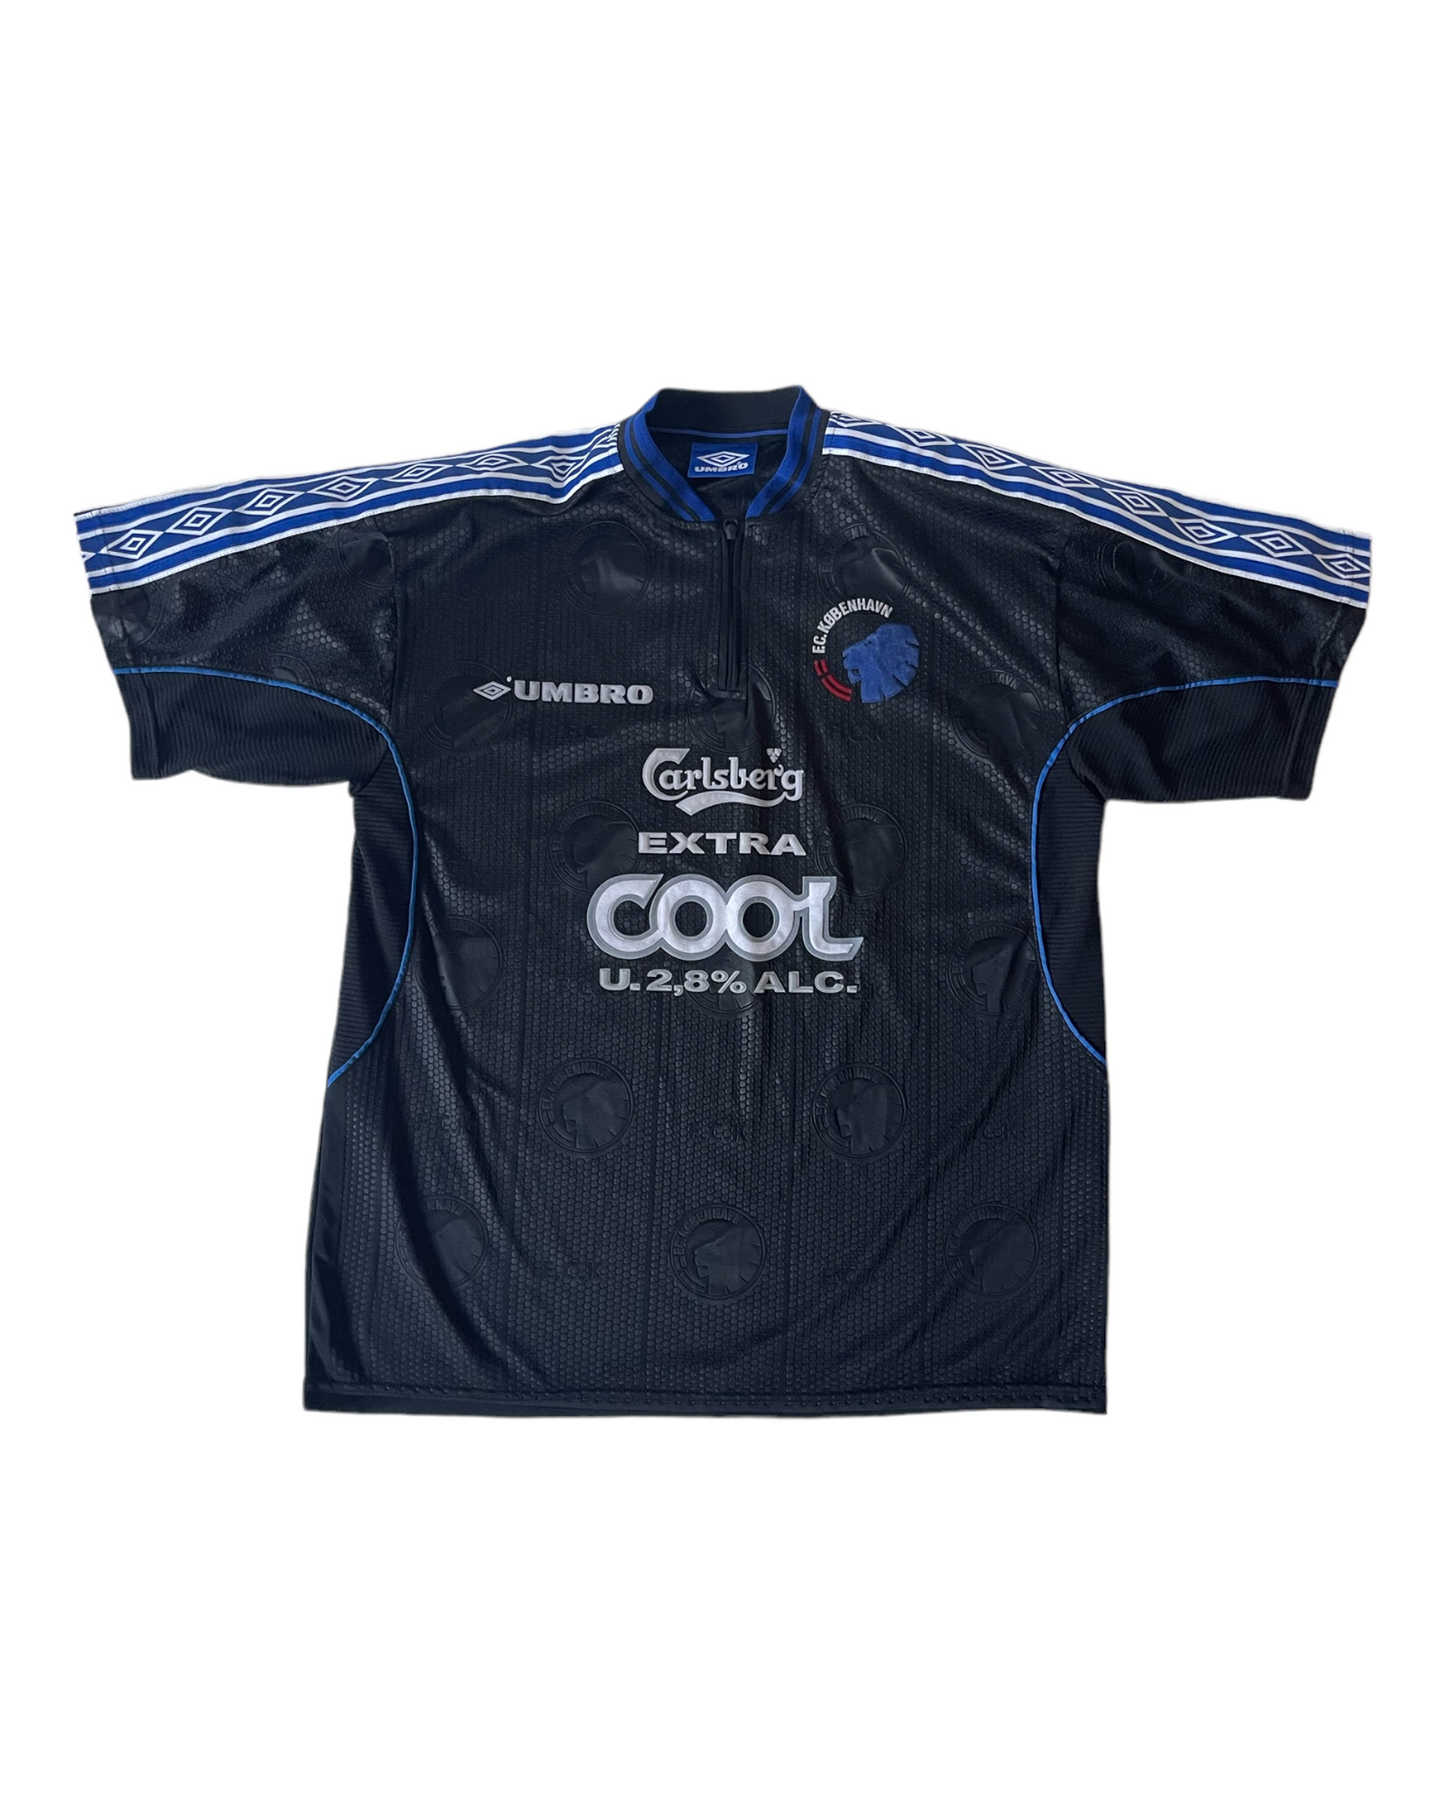 FC Copenhagen København Umbro Away Football Shirt 1999-2000 Black Carlsberg Extra Cool Size L